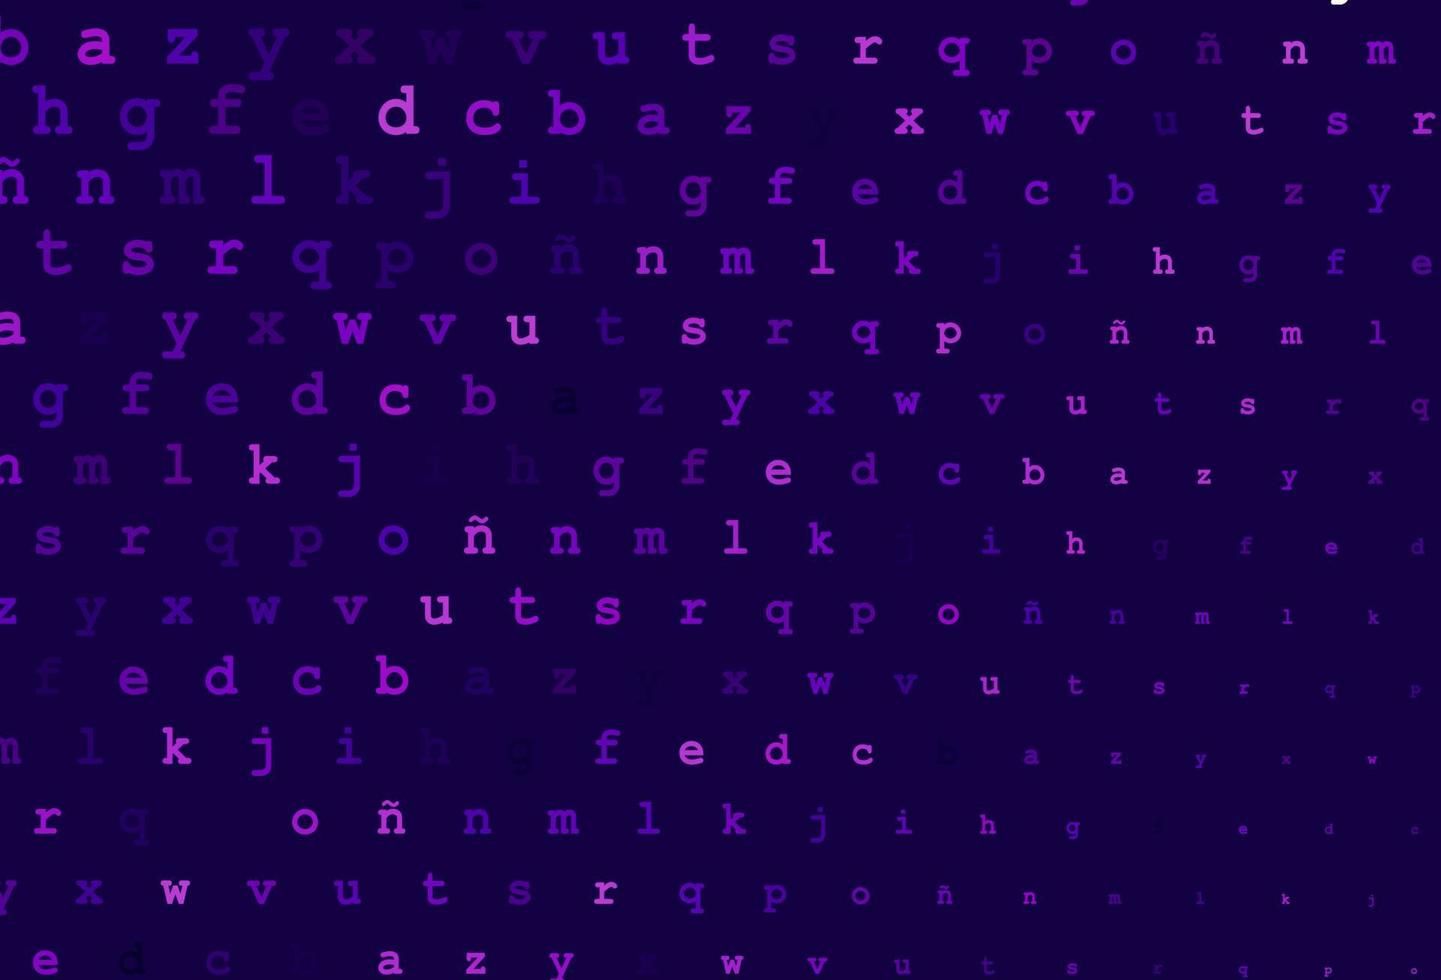 layout de vetor roxo escuro, rosa com alfabeto latino.